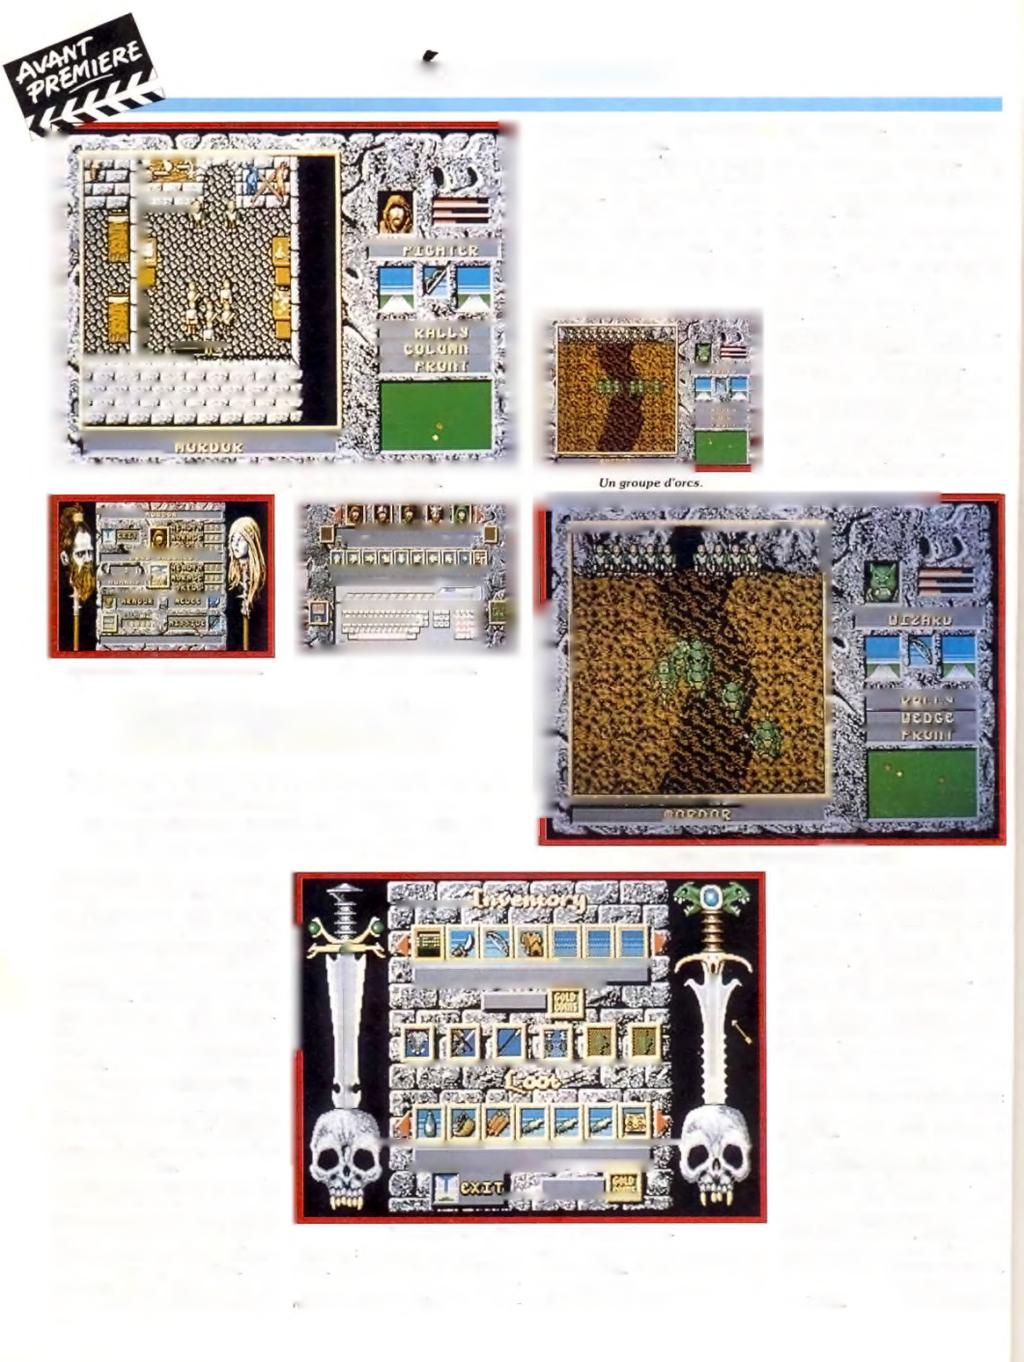 RPG Map by Richard Lems  Pixel Art Gallery on Lospec